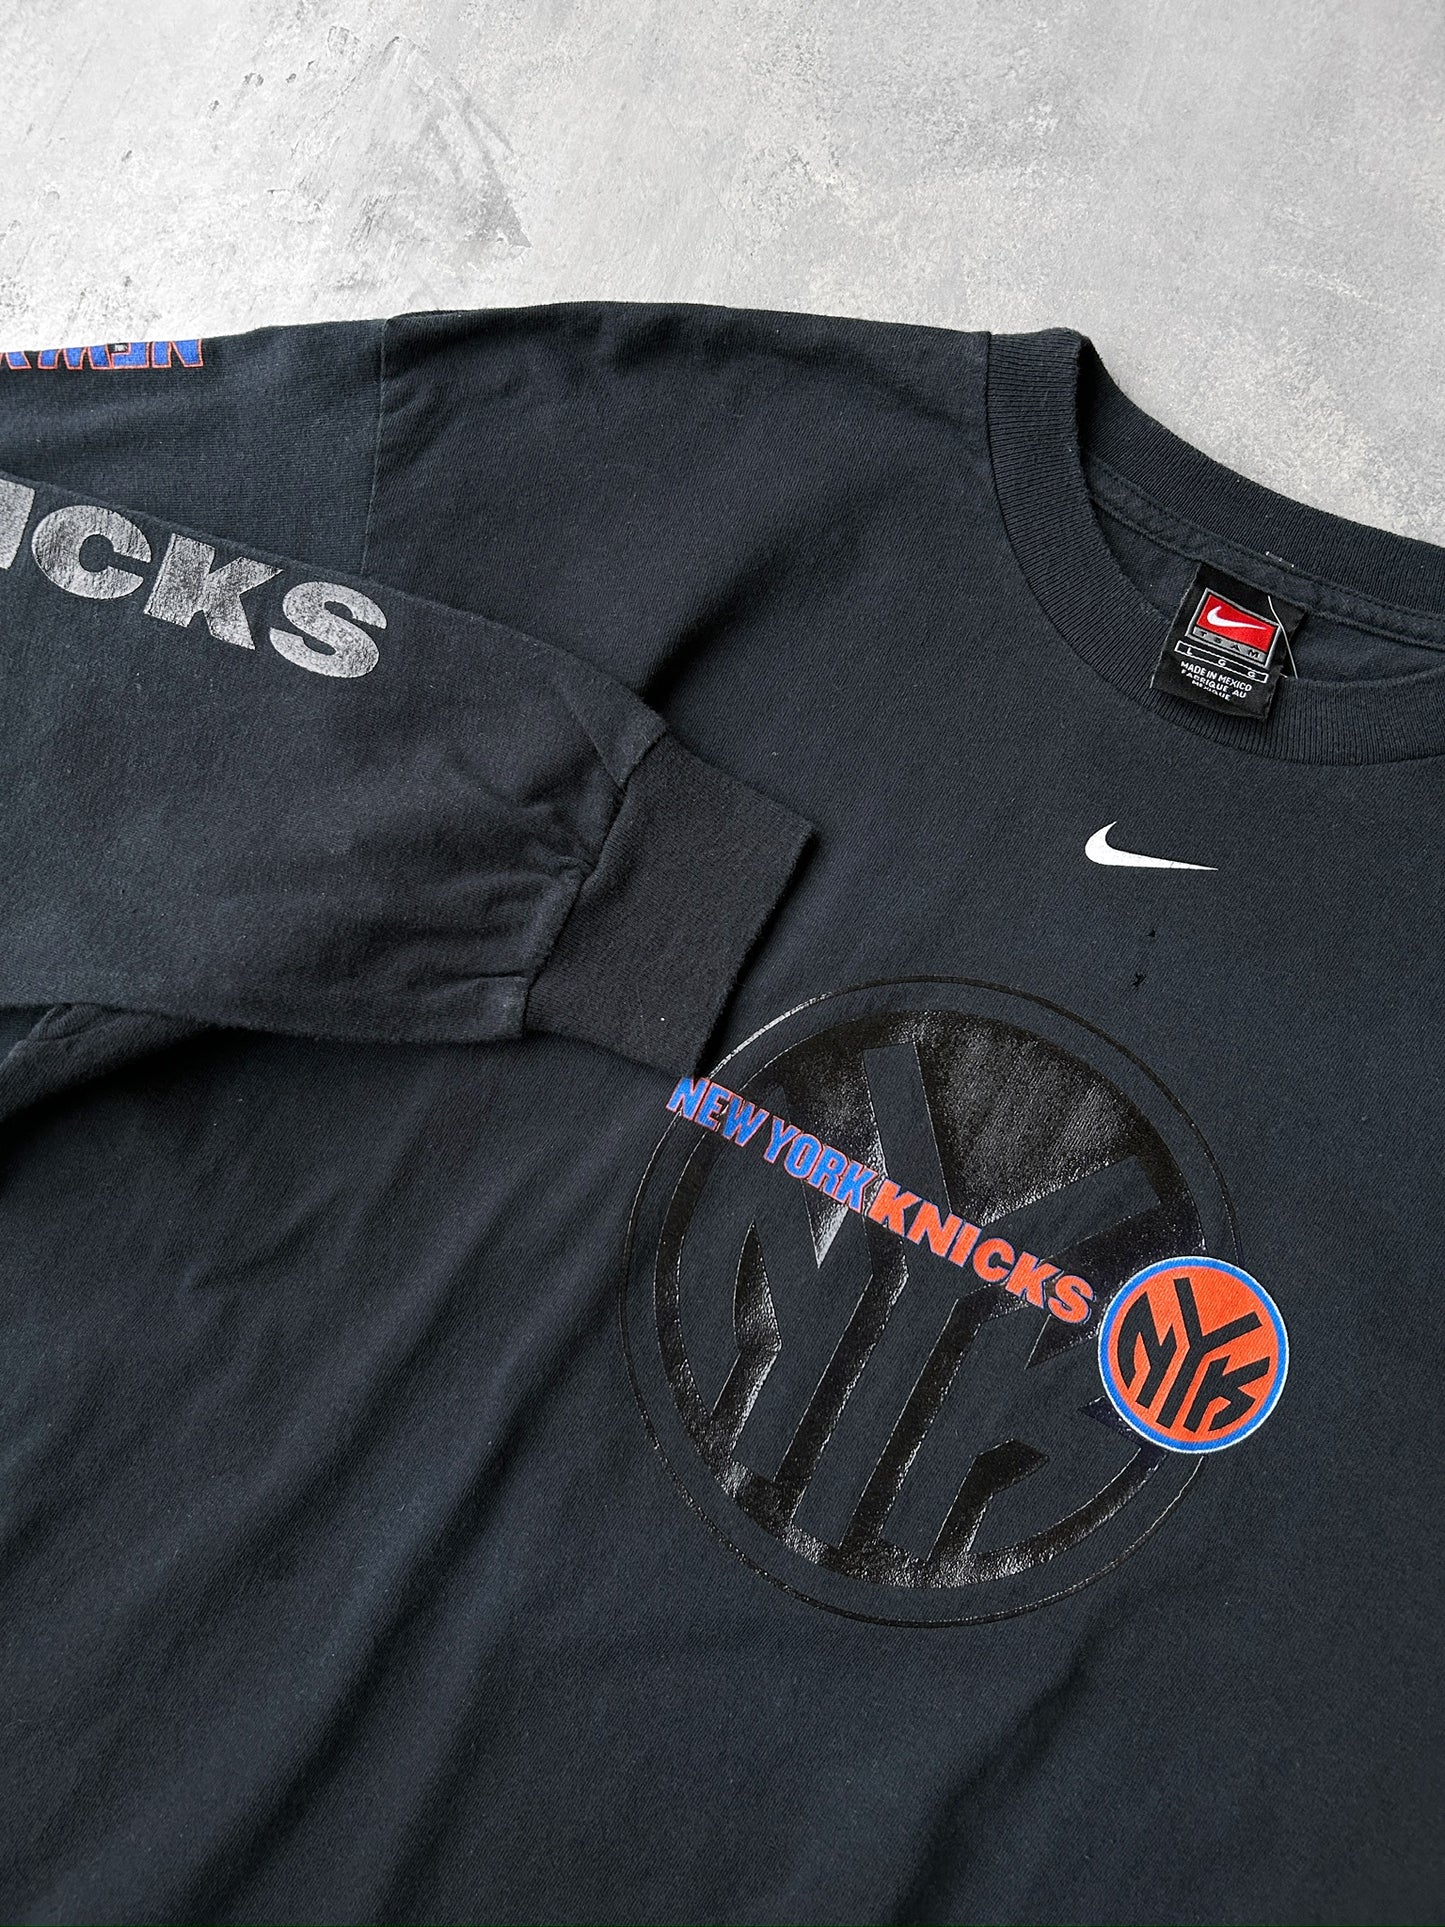 New York Knicks T-Shirt 00's - Large